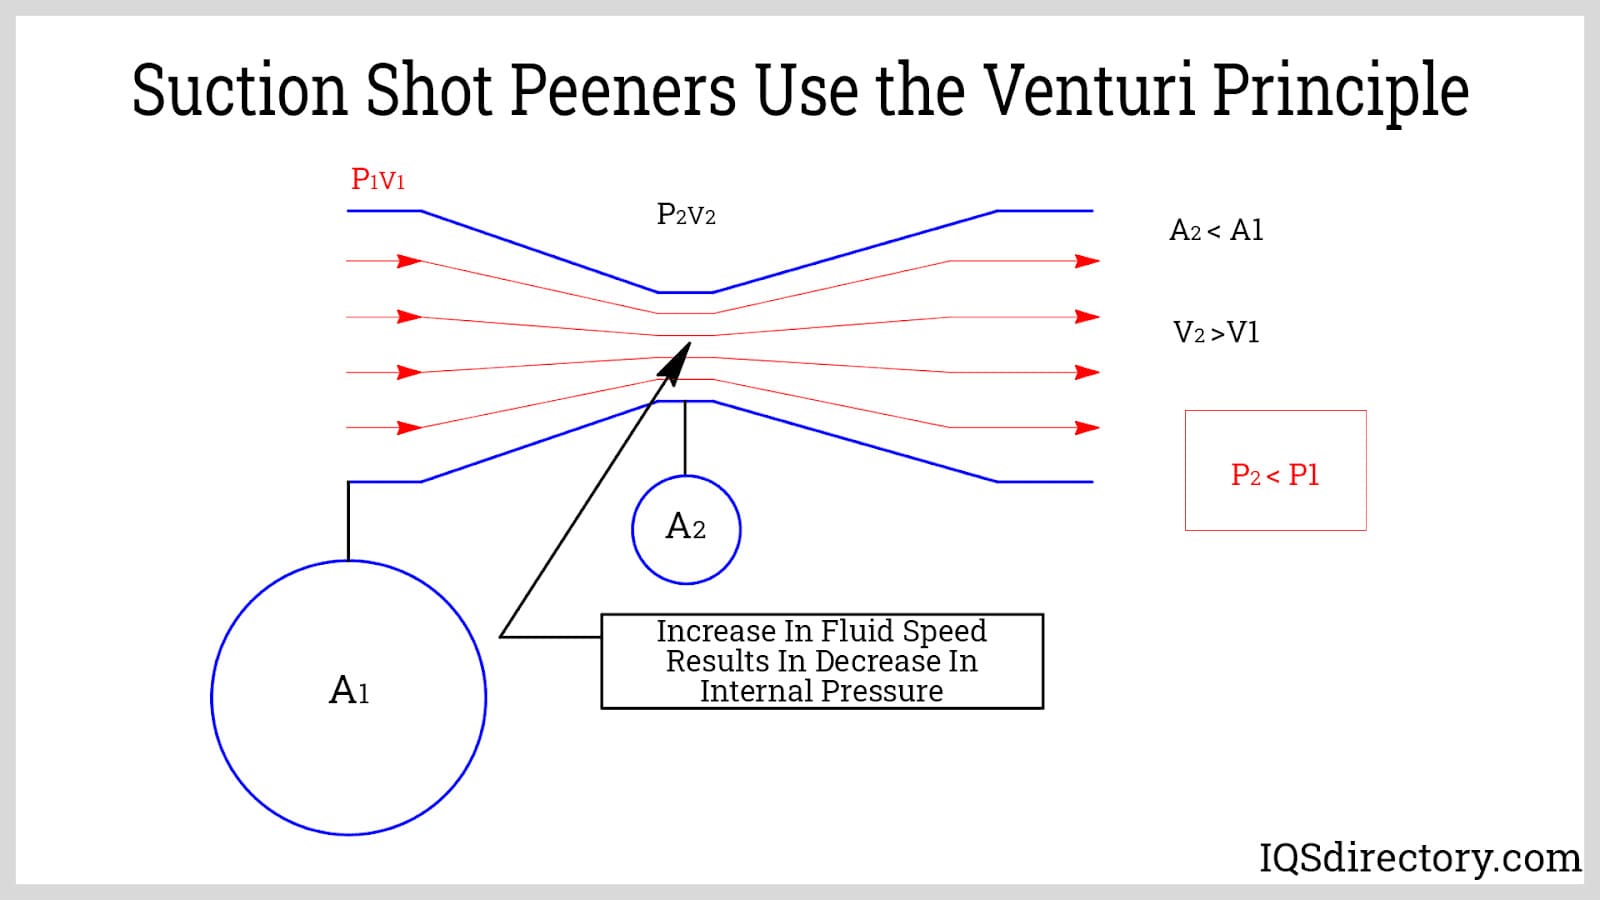 Suction Shot Peeners Use the Venturi Principle